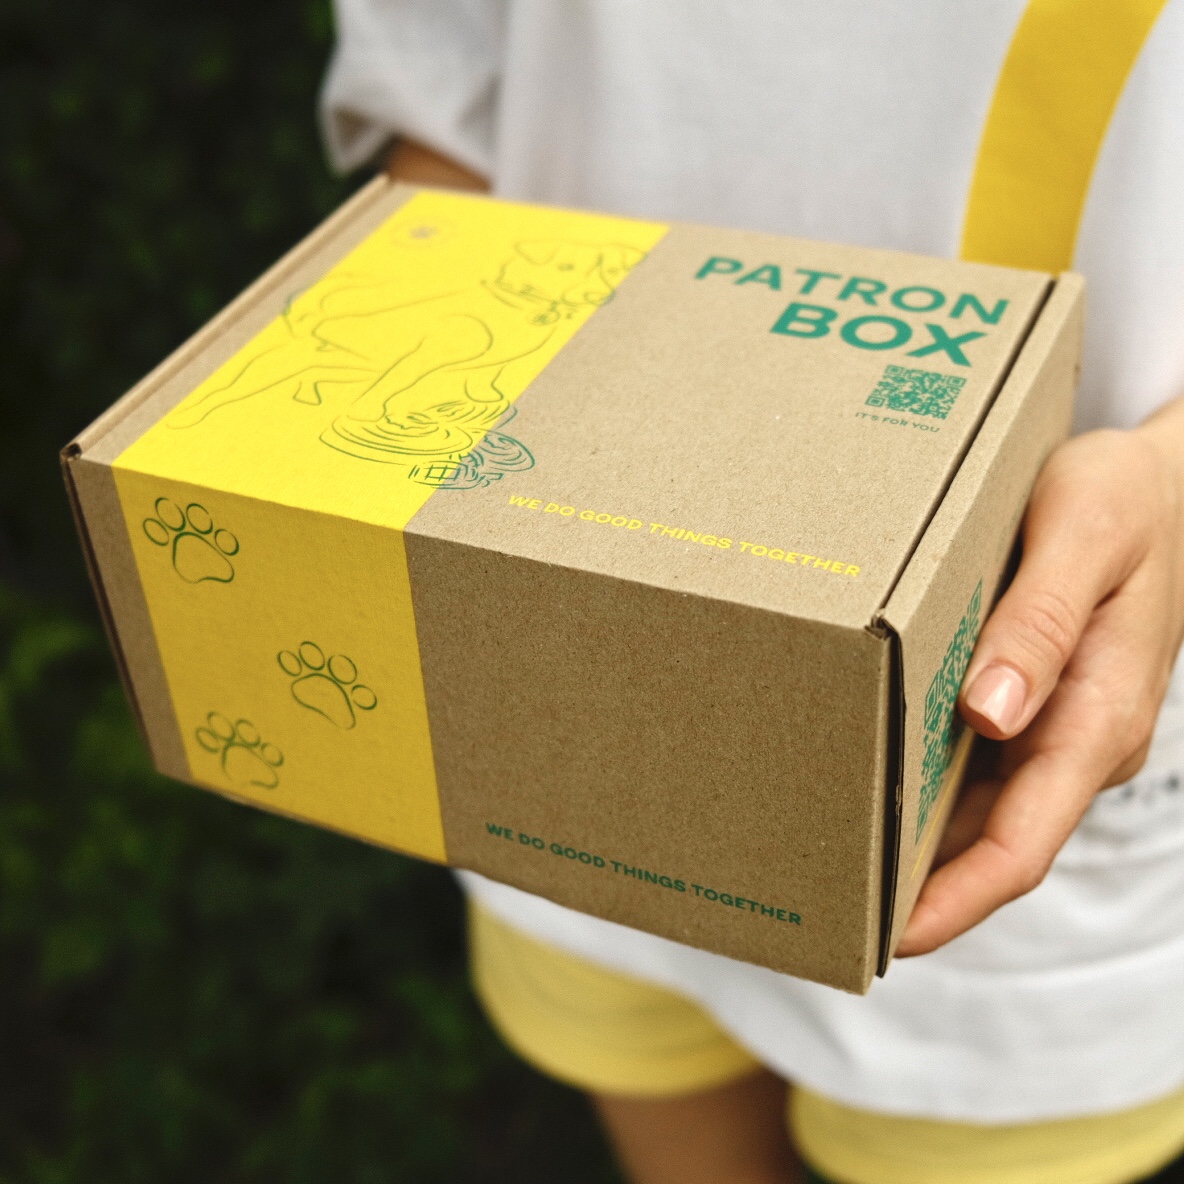 Gift mini box Patron - 2